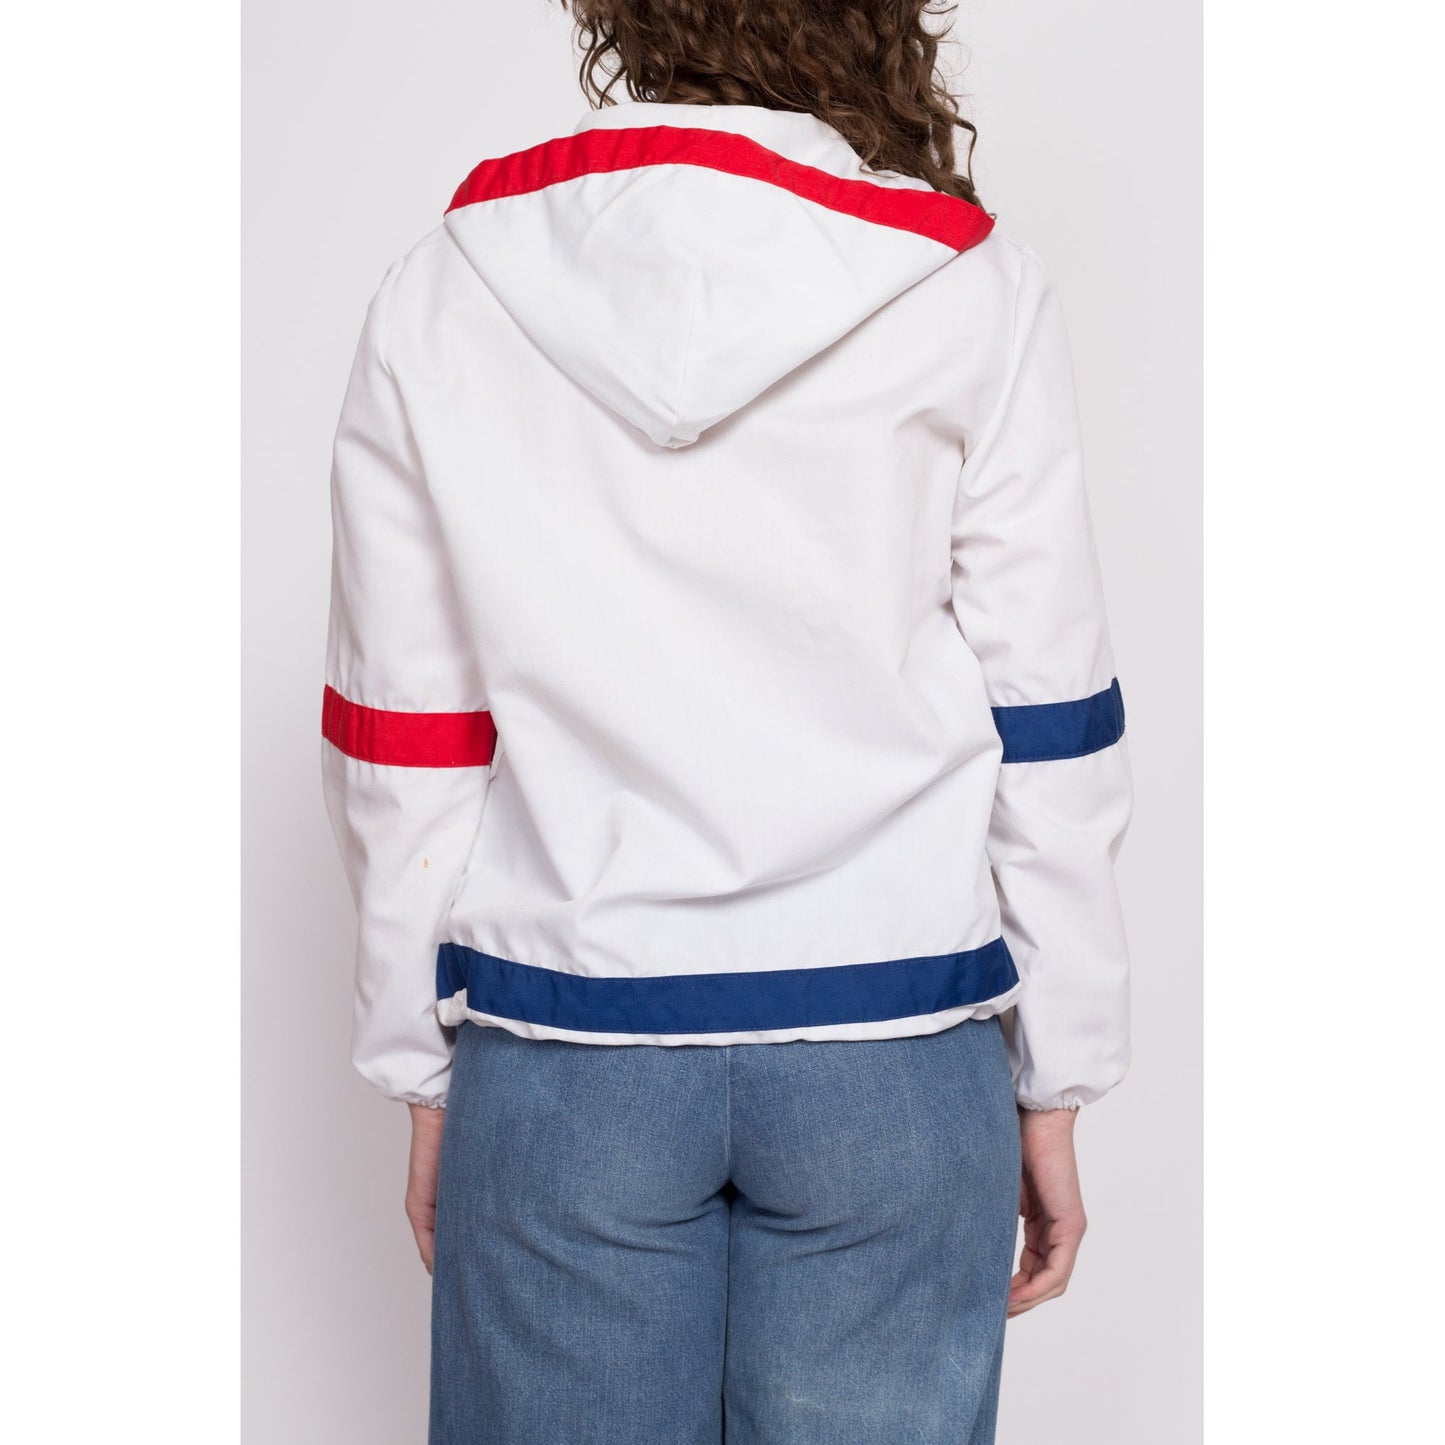 70s Mod Red White & Blue Striped Windbreaker - Petite Medium | Weather Tamer Lightweight Hooded Color Block Jacket